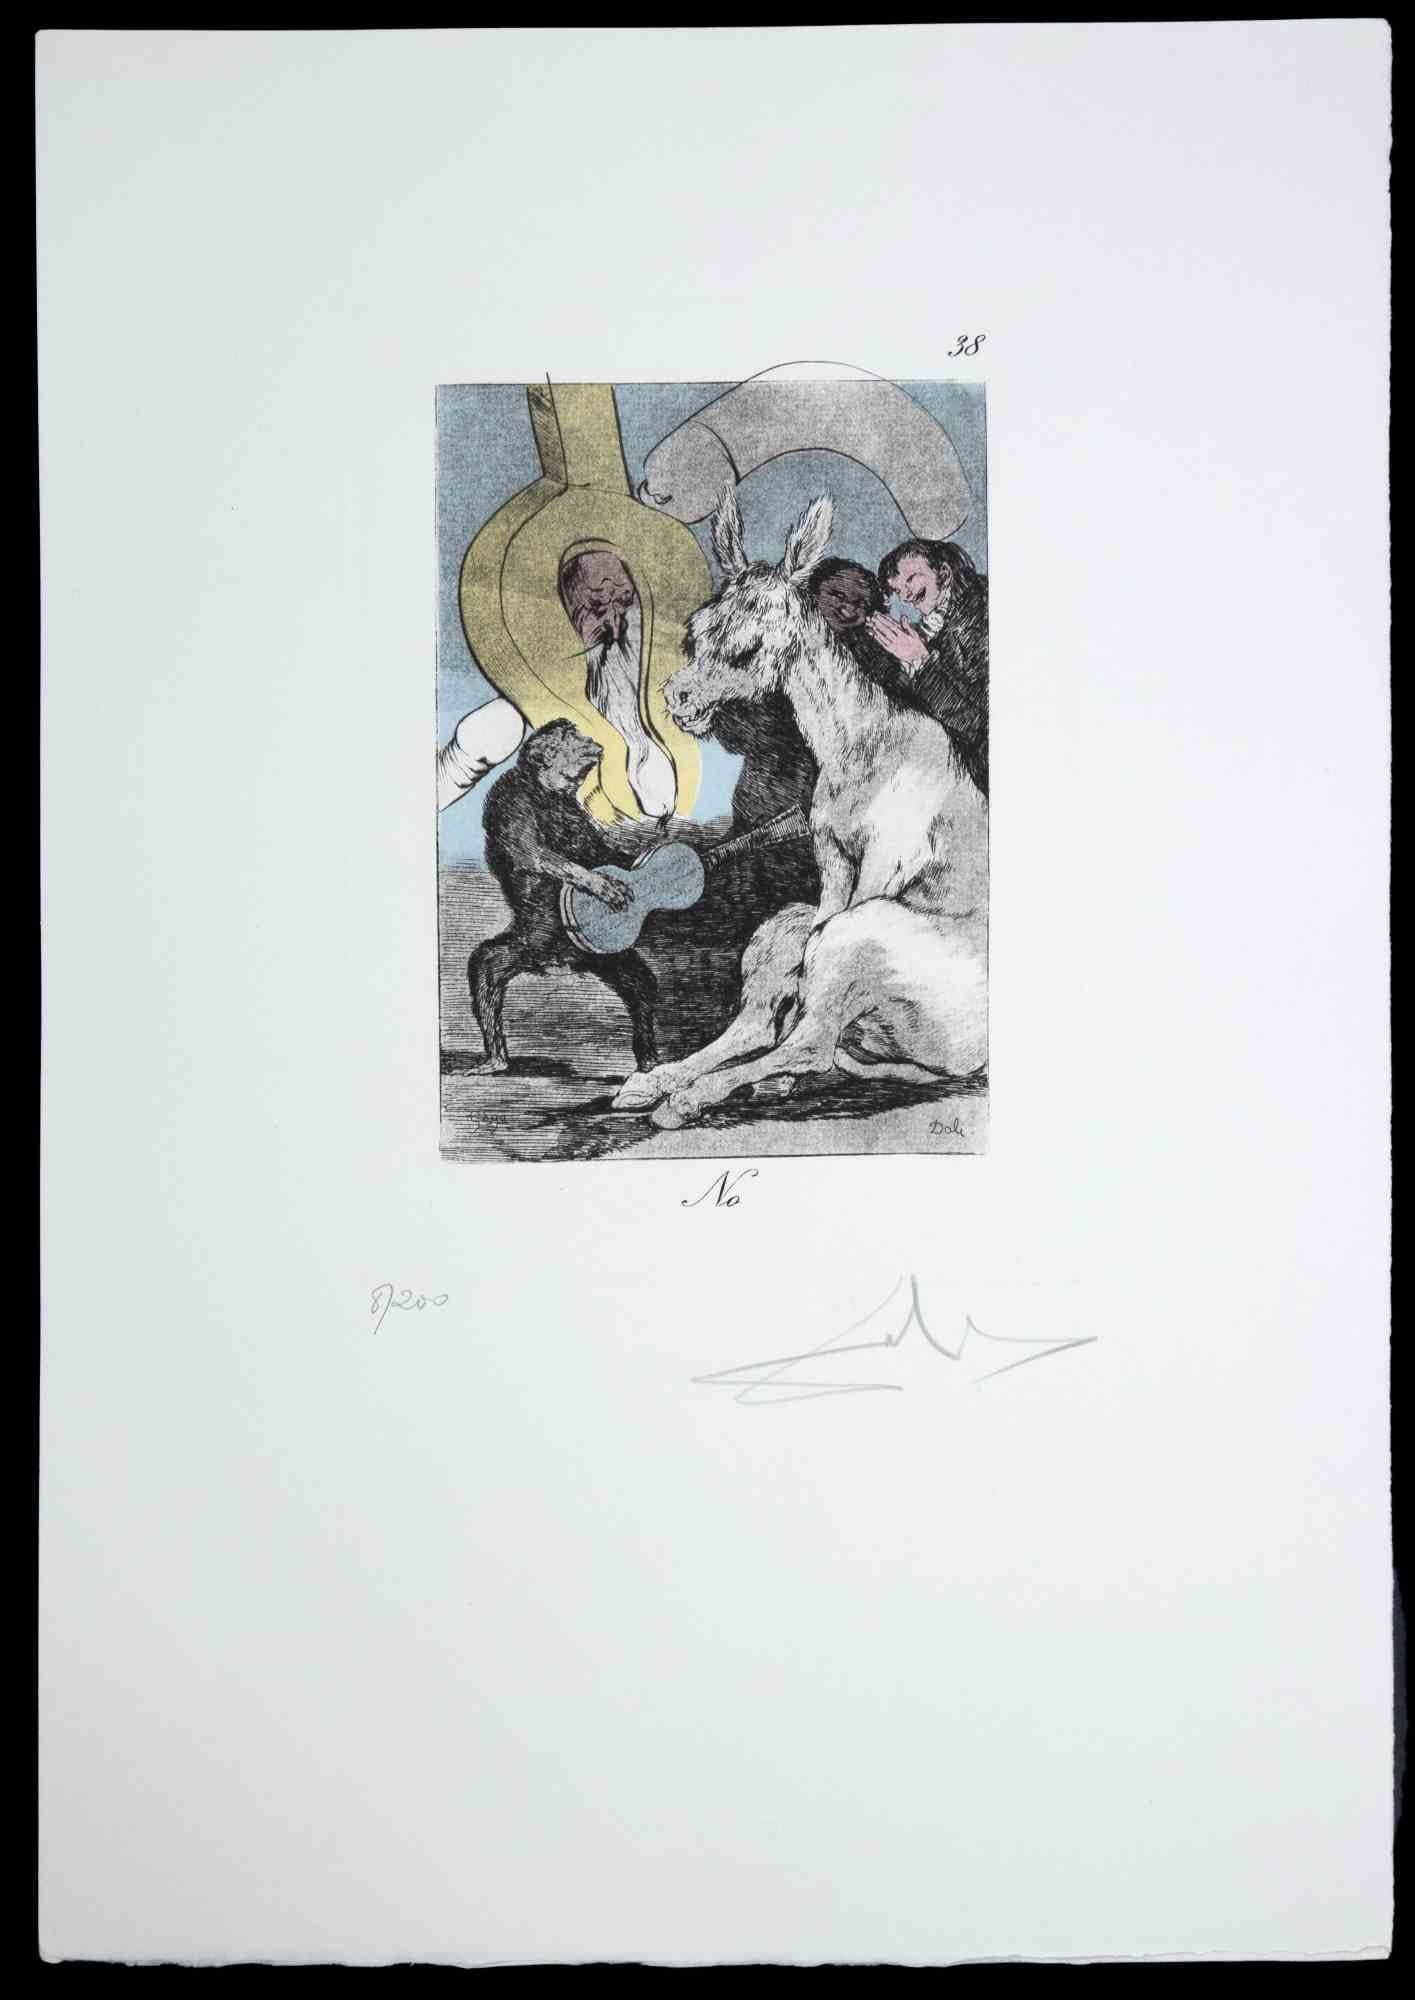 Salvador Dalí Animal Print - Les Caprices de Goya de Dalì - Salvador Dalì Attributed - 1977